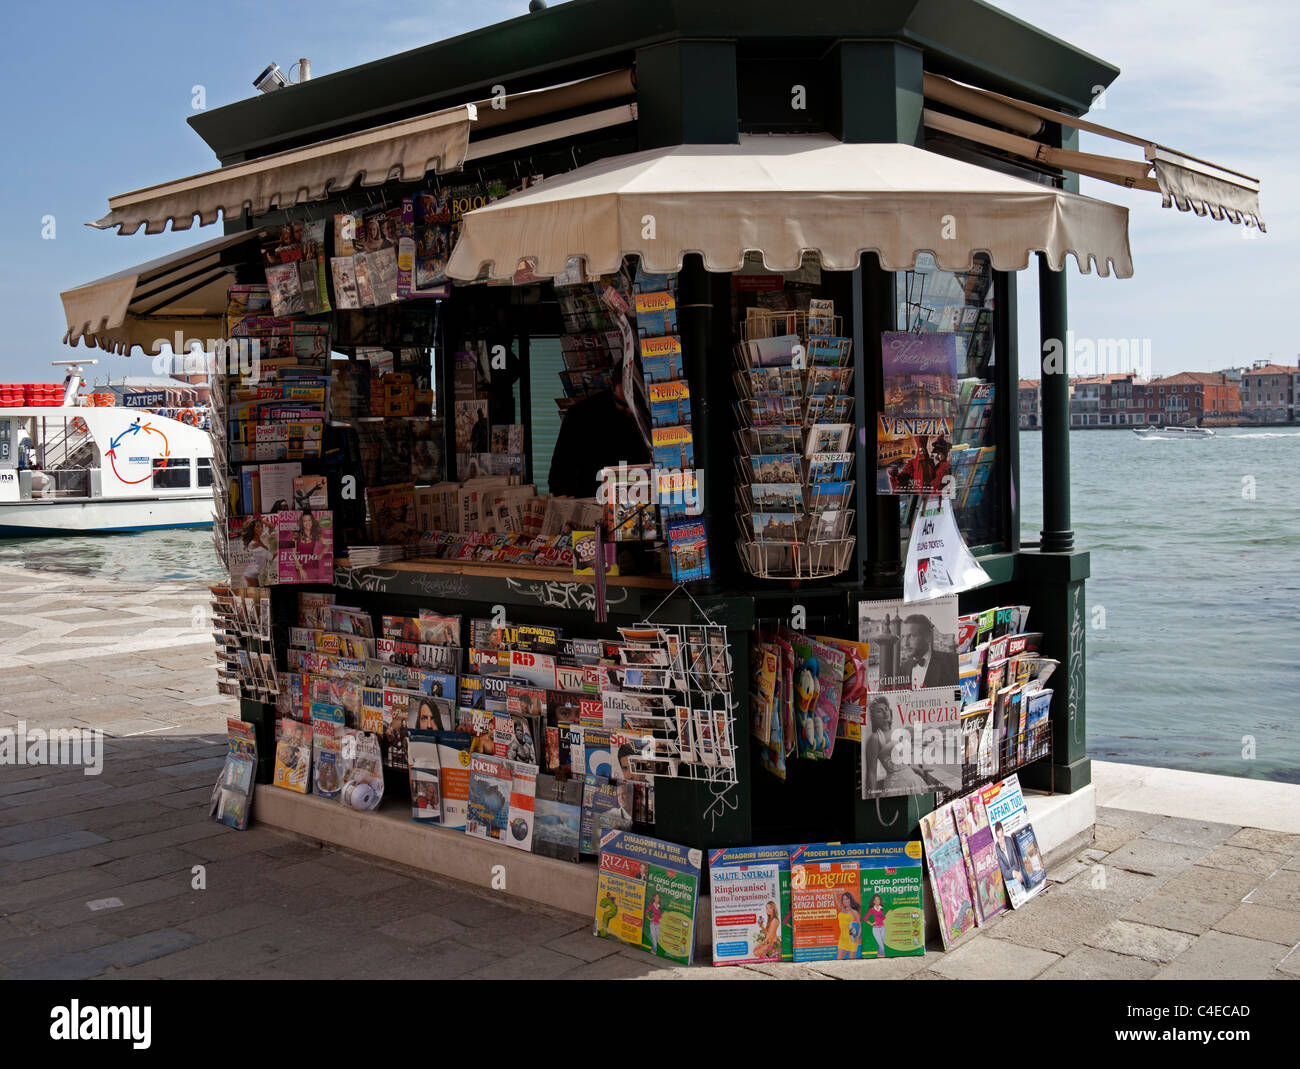 Venice Italy news stand kiosk Stock Photo